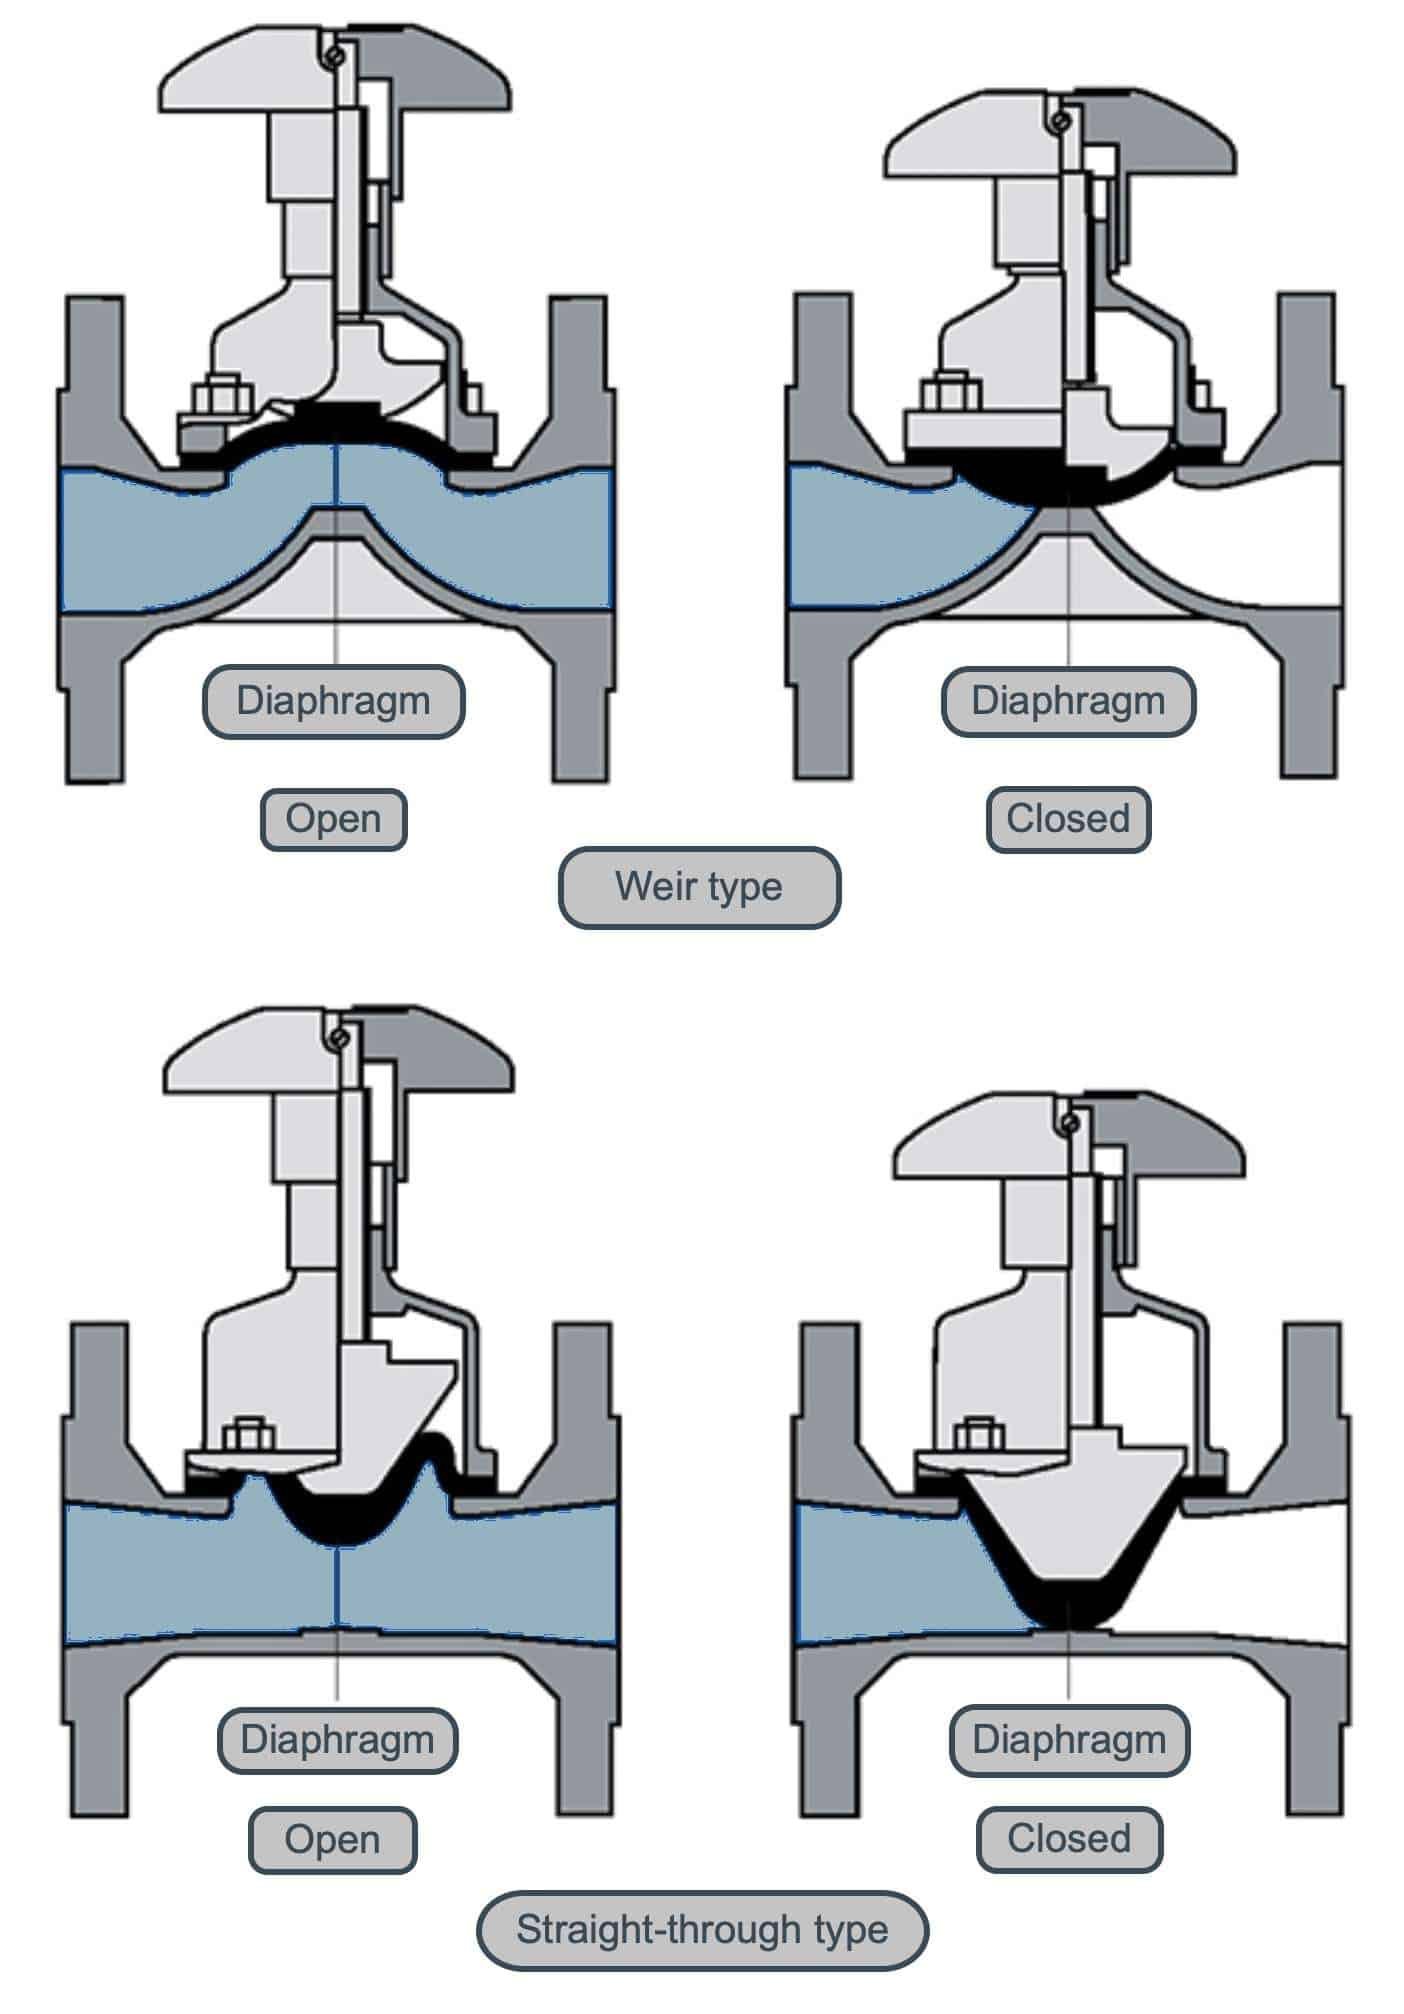 Weir and Straight-Through diaphragm valve